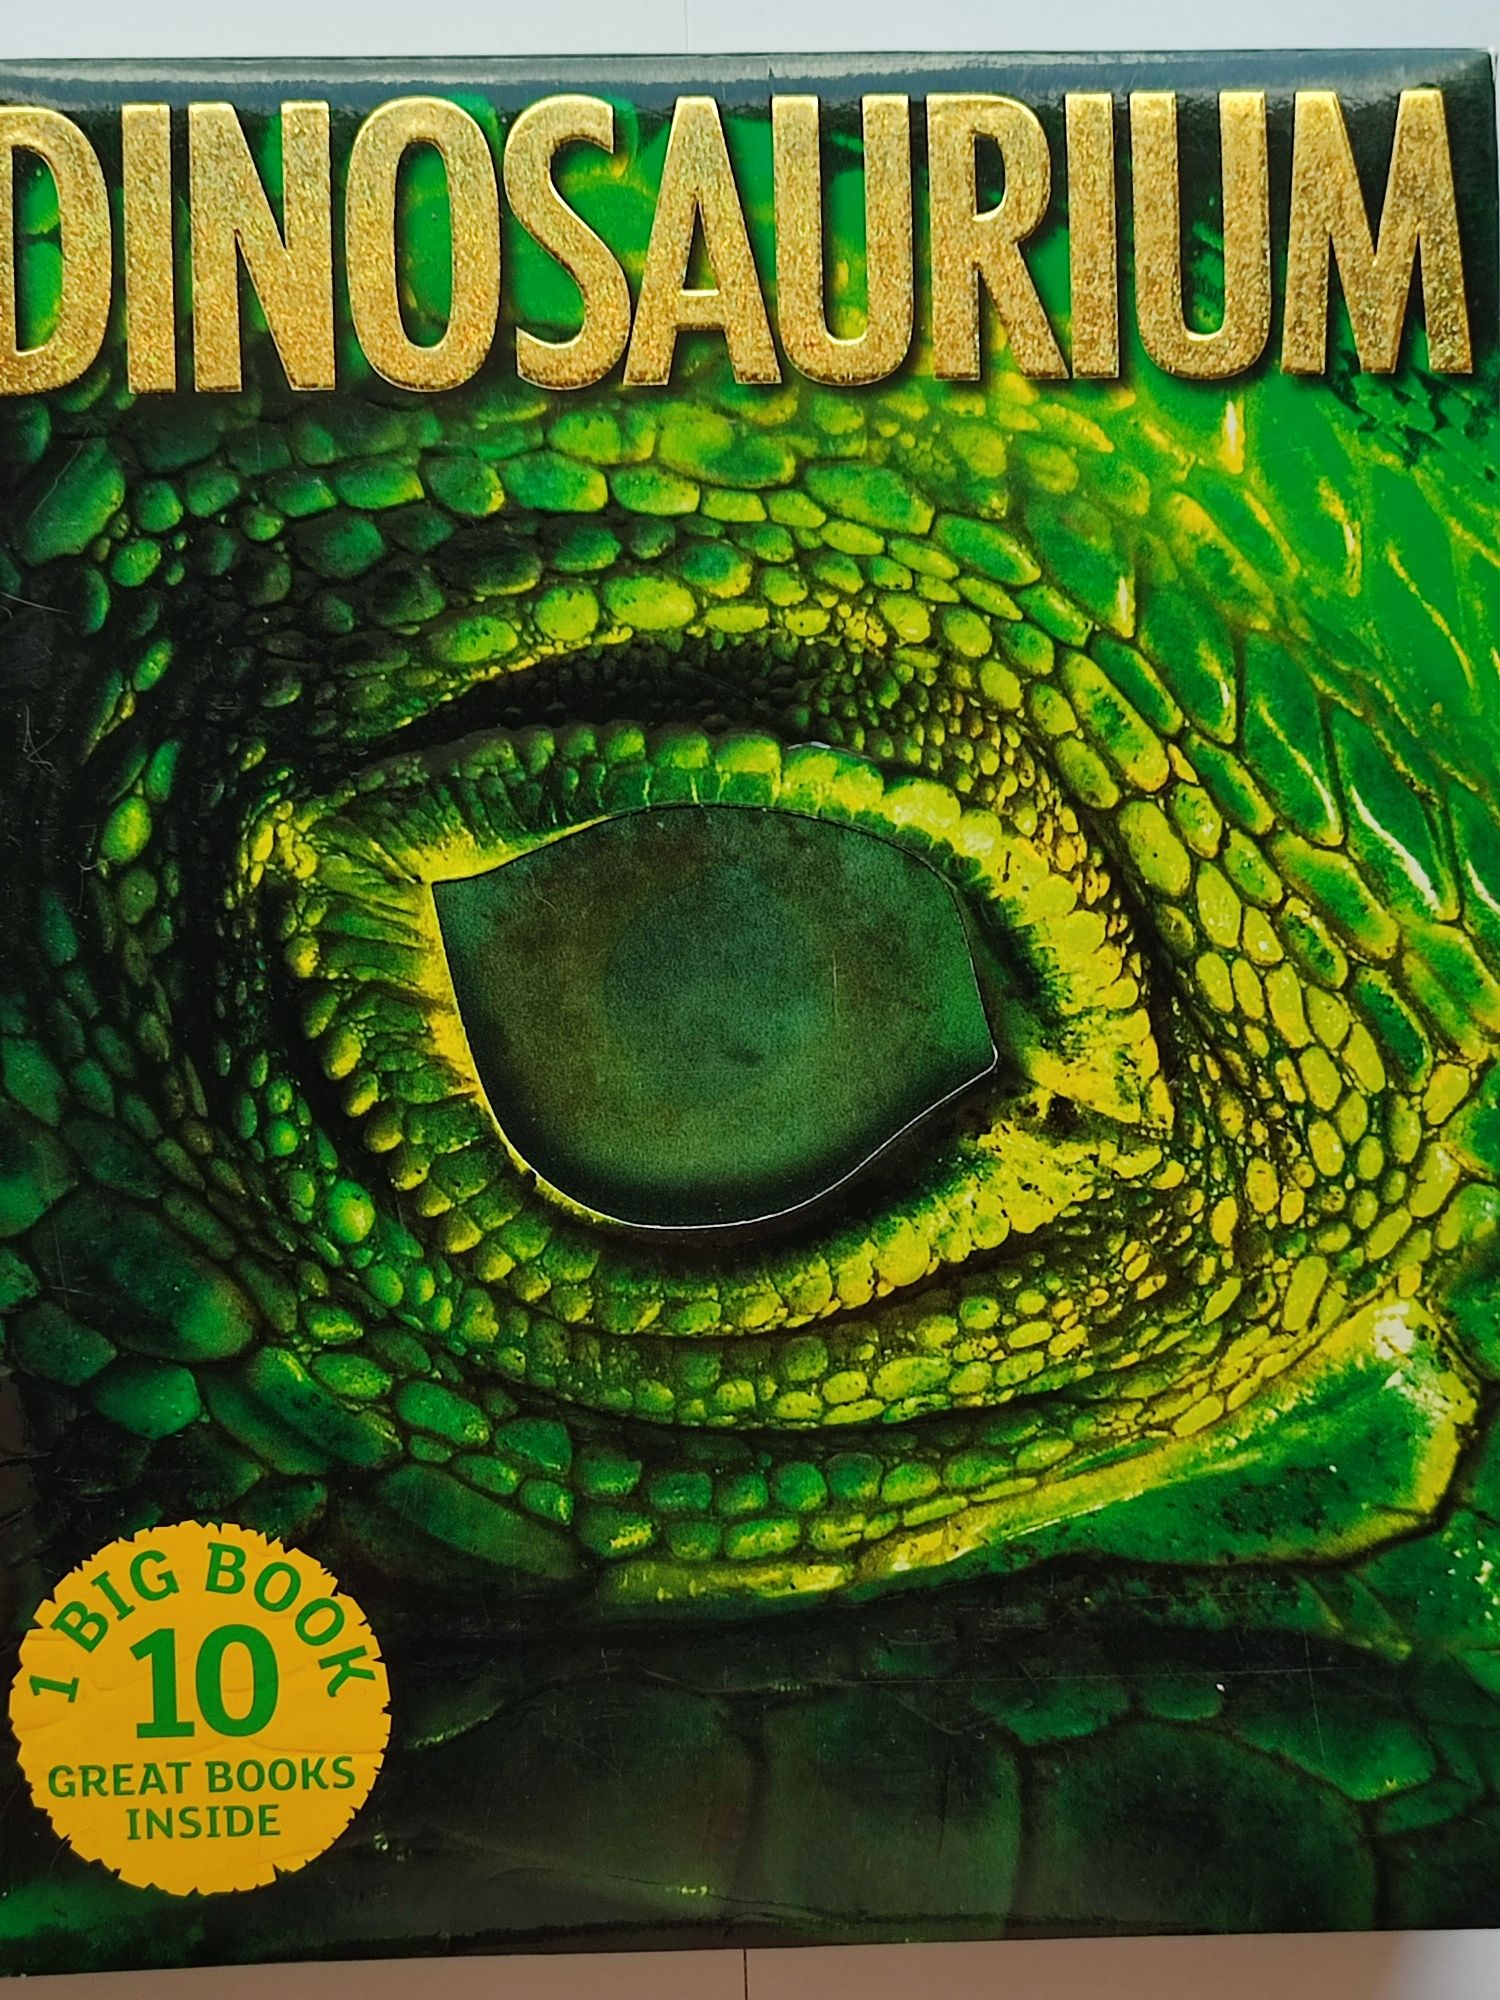 Encyklopedia dinosaurium